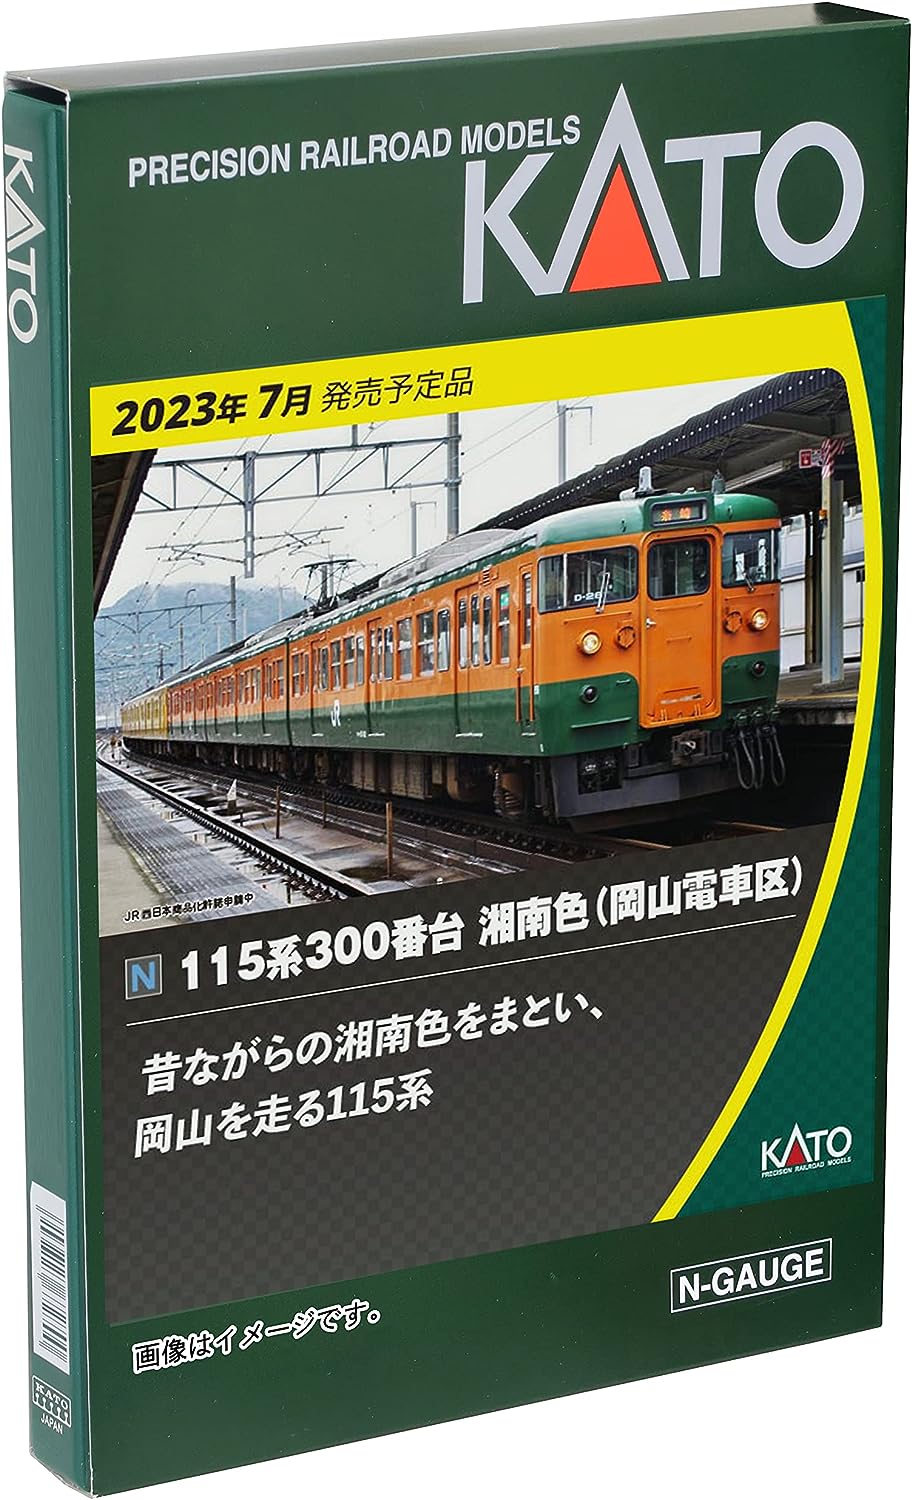 10-1809 Series 115-300 Syonan Color (Okayama Railyard) Three Car Set (3-Car Set)